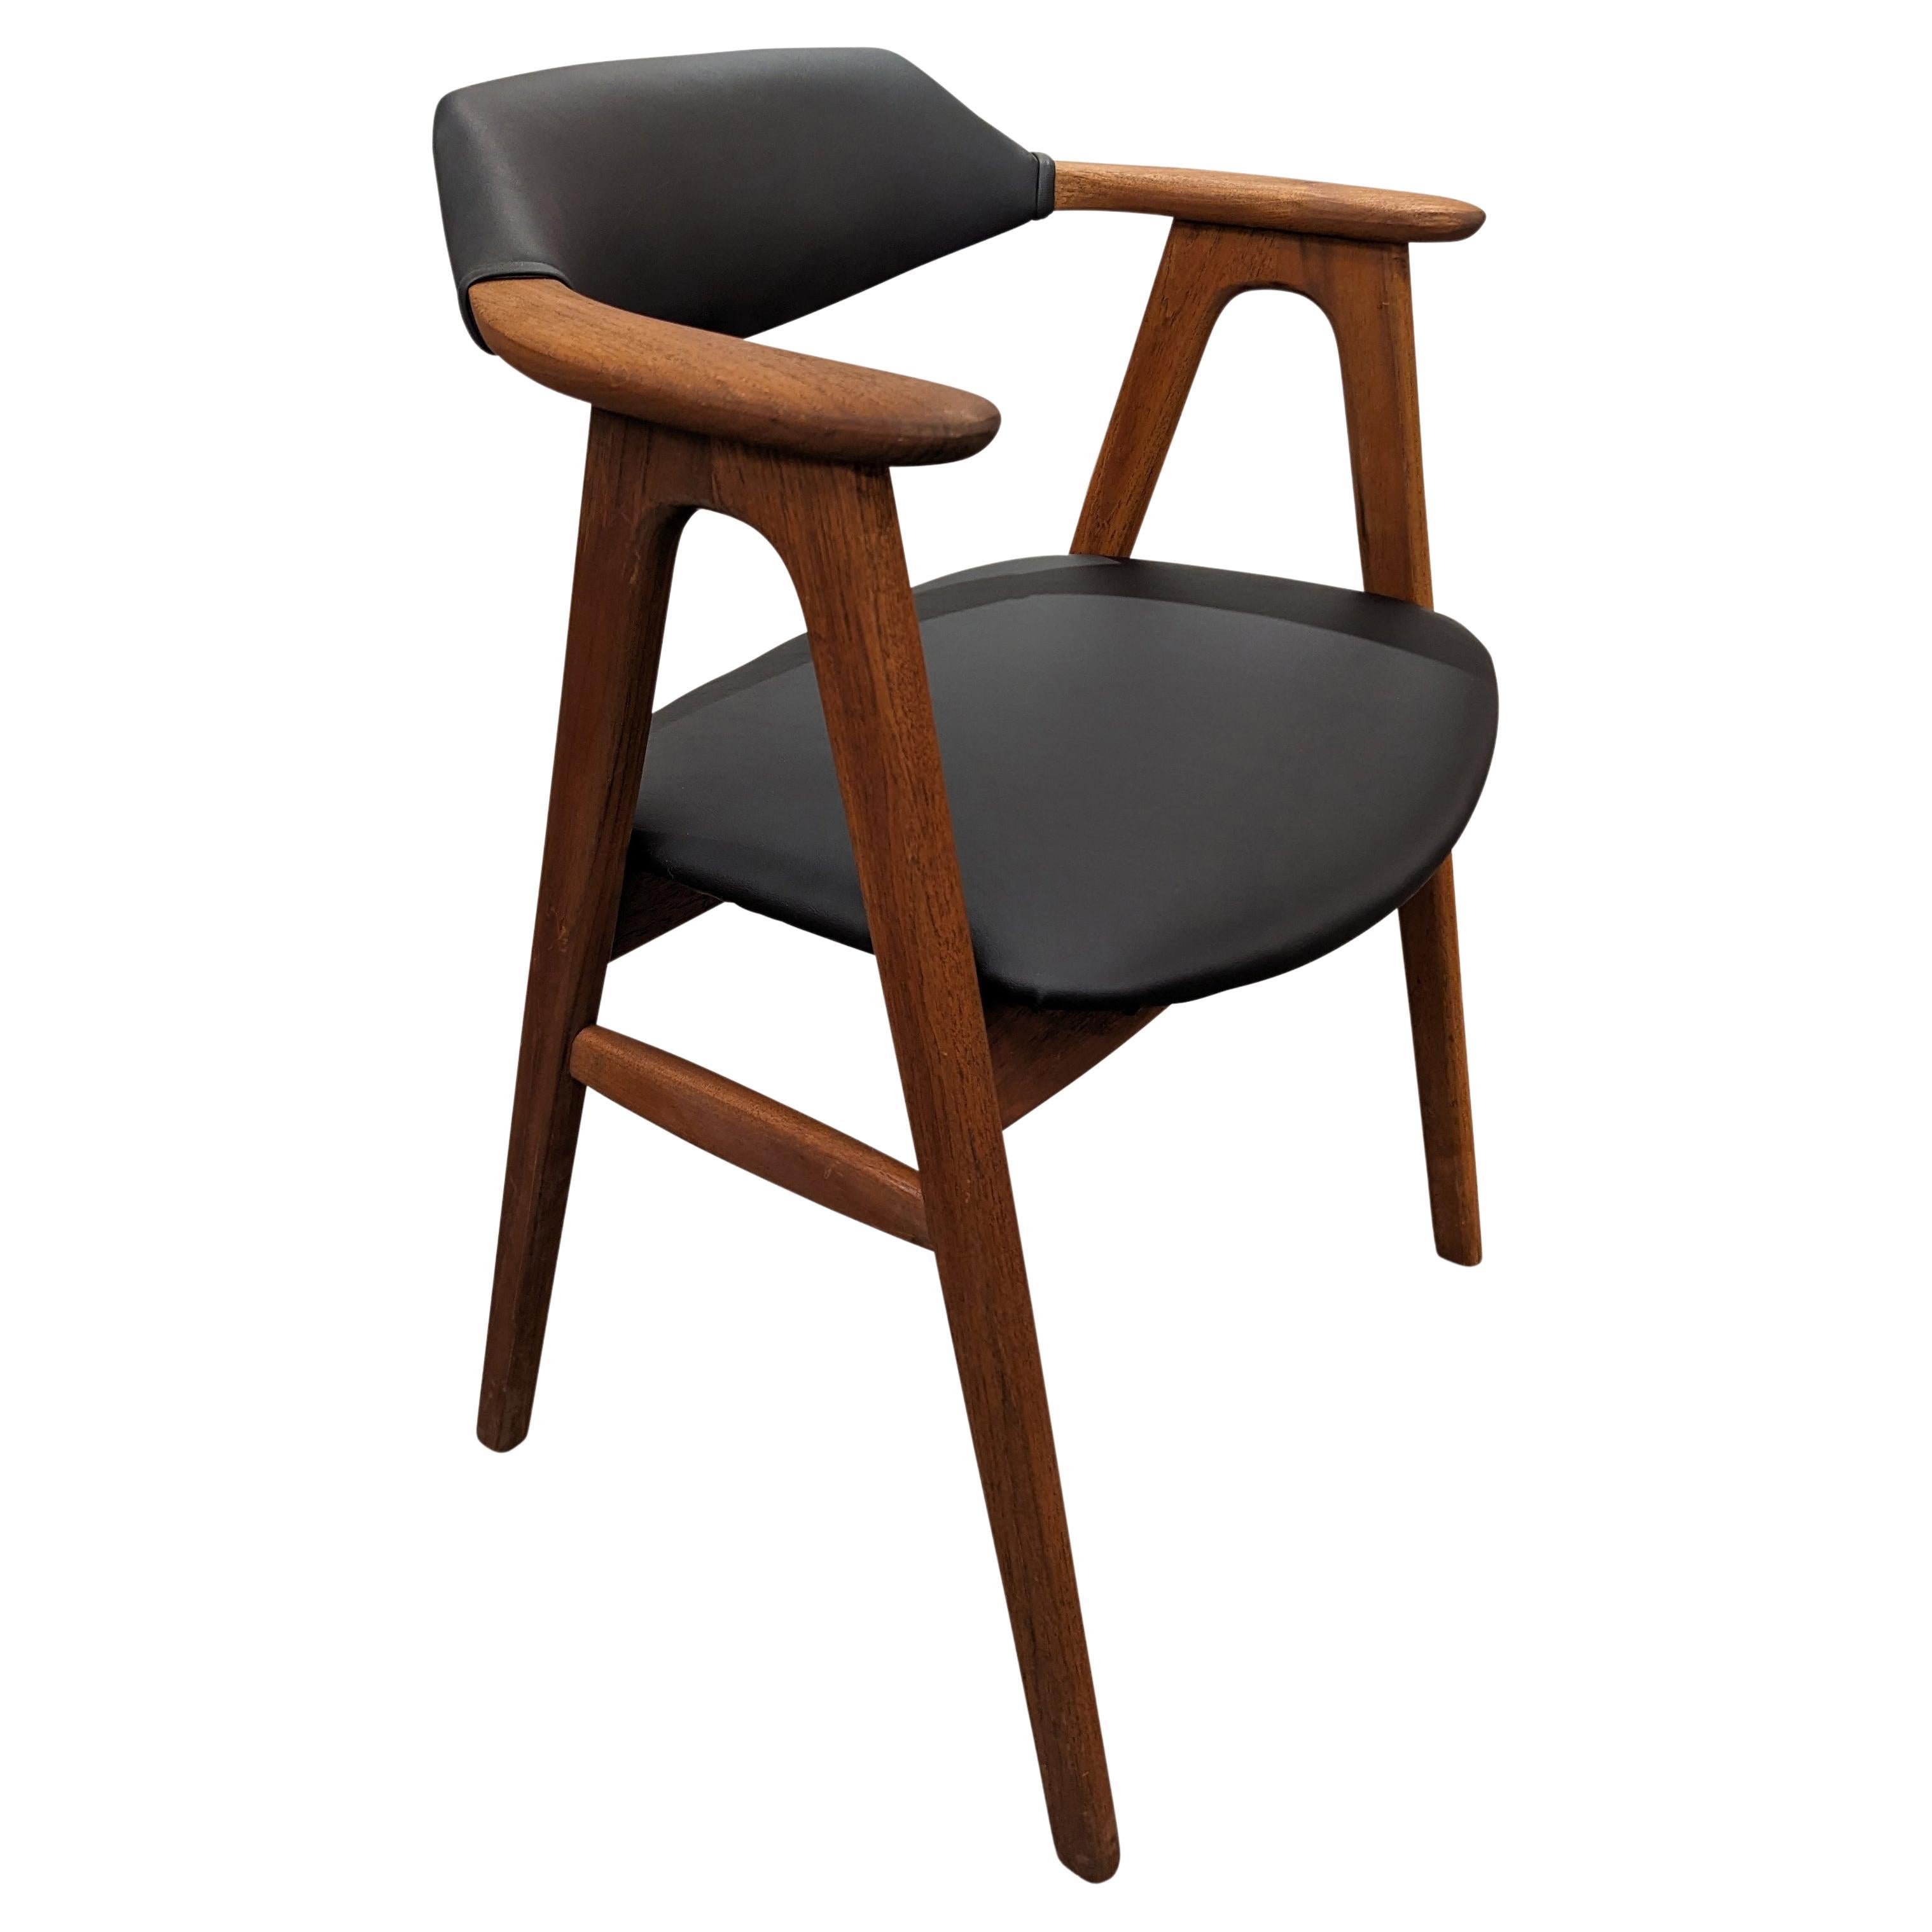  Vintage Danish Mid Century Erik Kirkegaard Arm Chair - 022430 For Sale